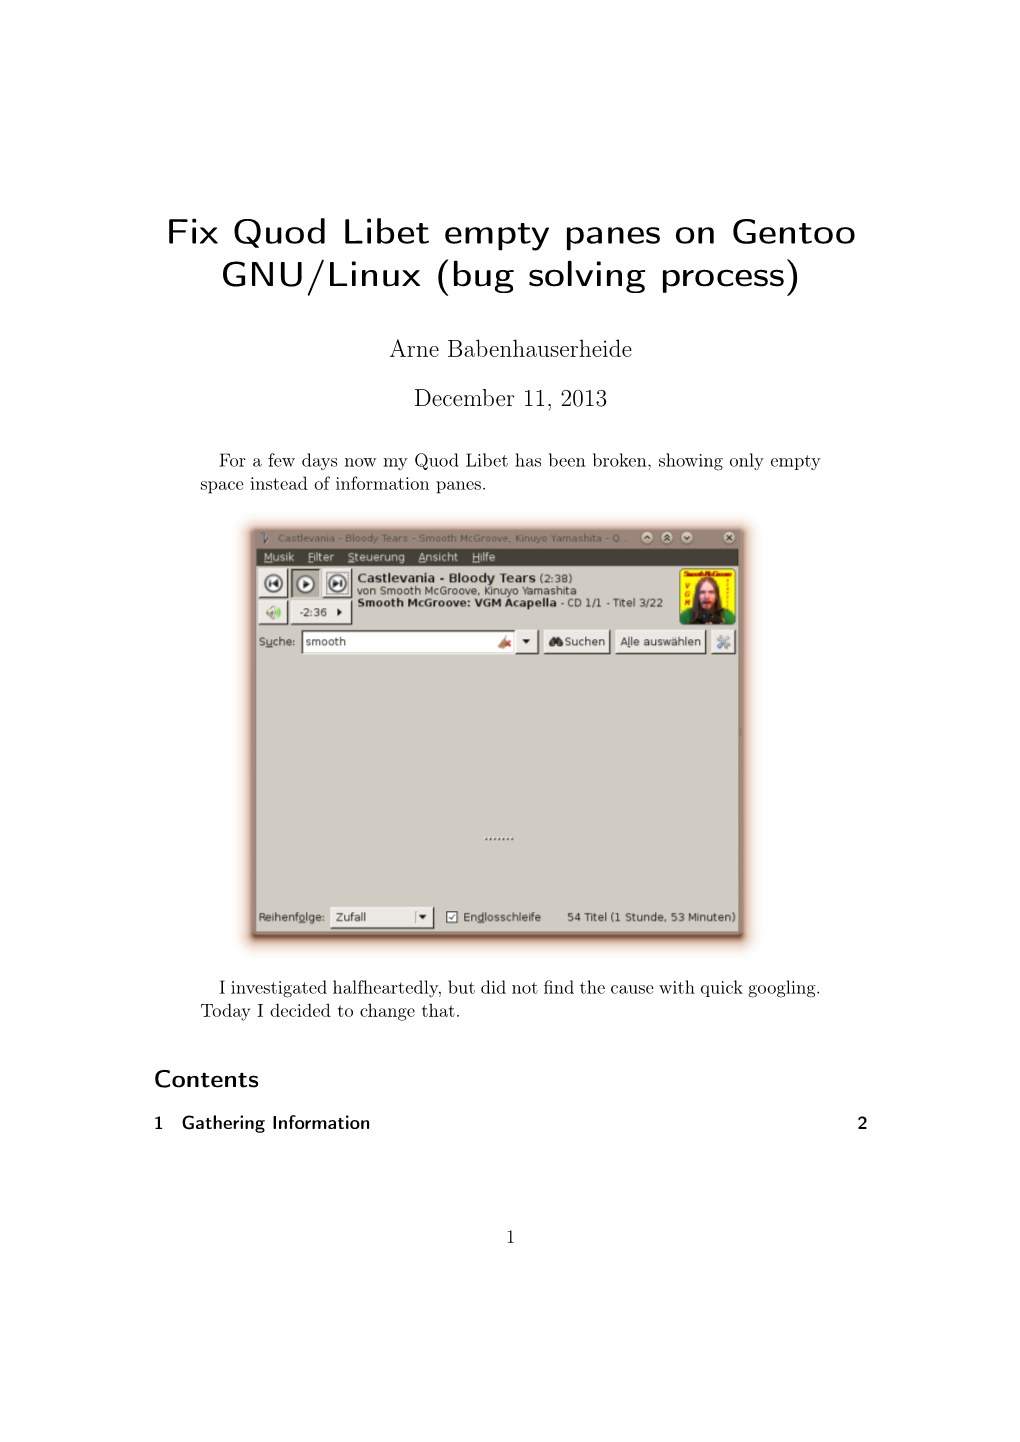 Fix Quod Libet Empty Panes on Gentoo GNU/Linux (Bug Solving Process)